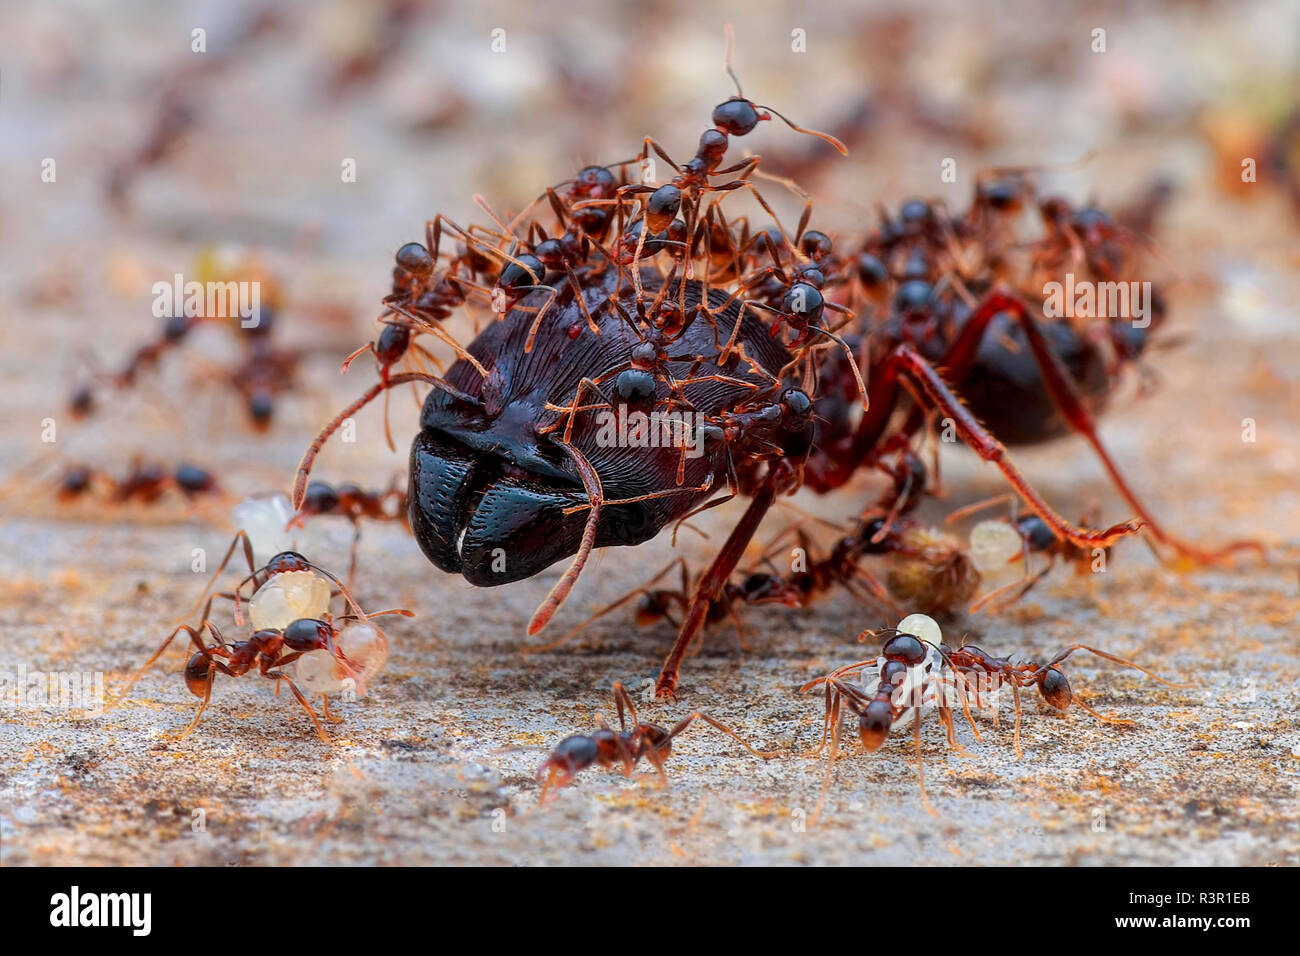 Minor worker ants protecting the major worker ant (Formicidae - Myrmicinae - Carebara diversa). Stock Photo